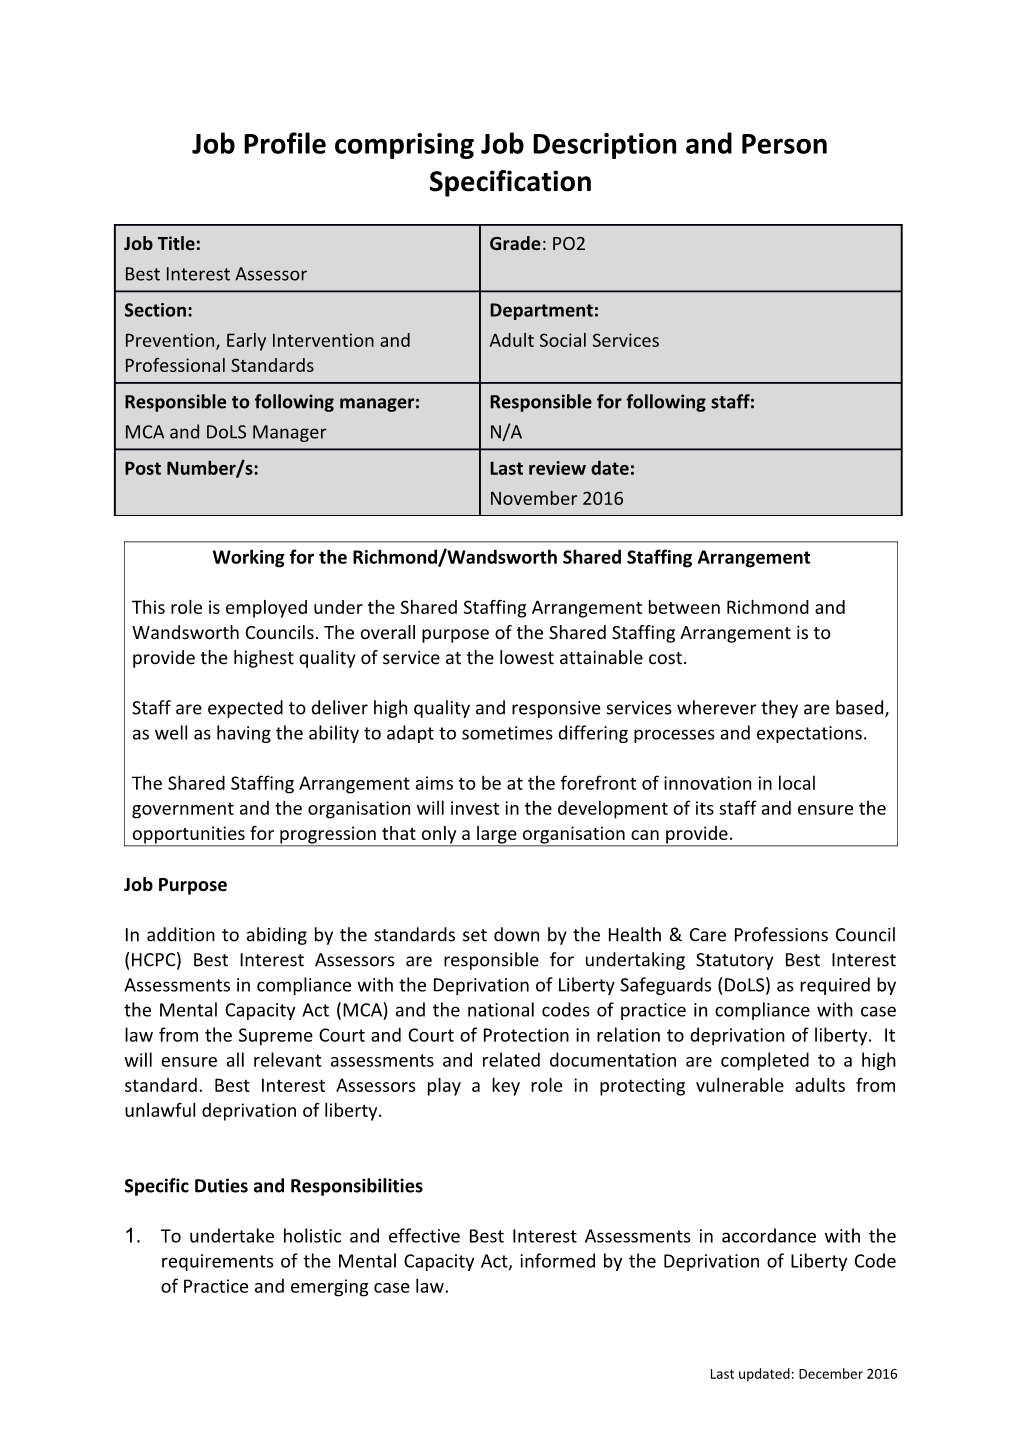 Job Profile Comprising Job Description and Person Specification